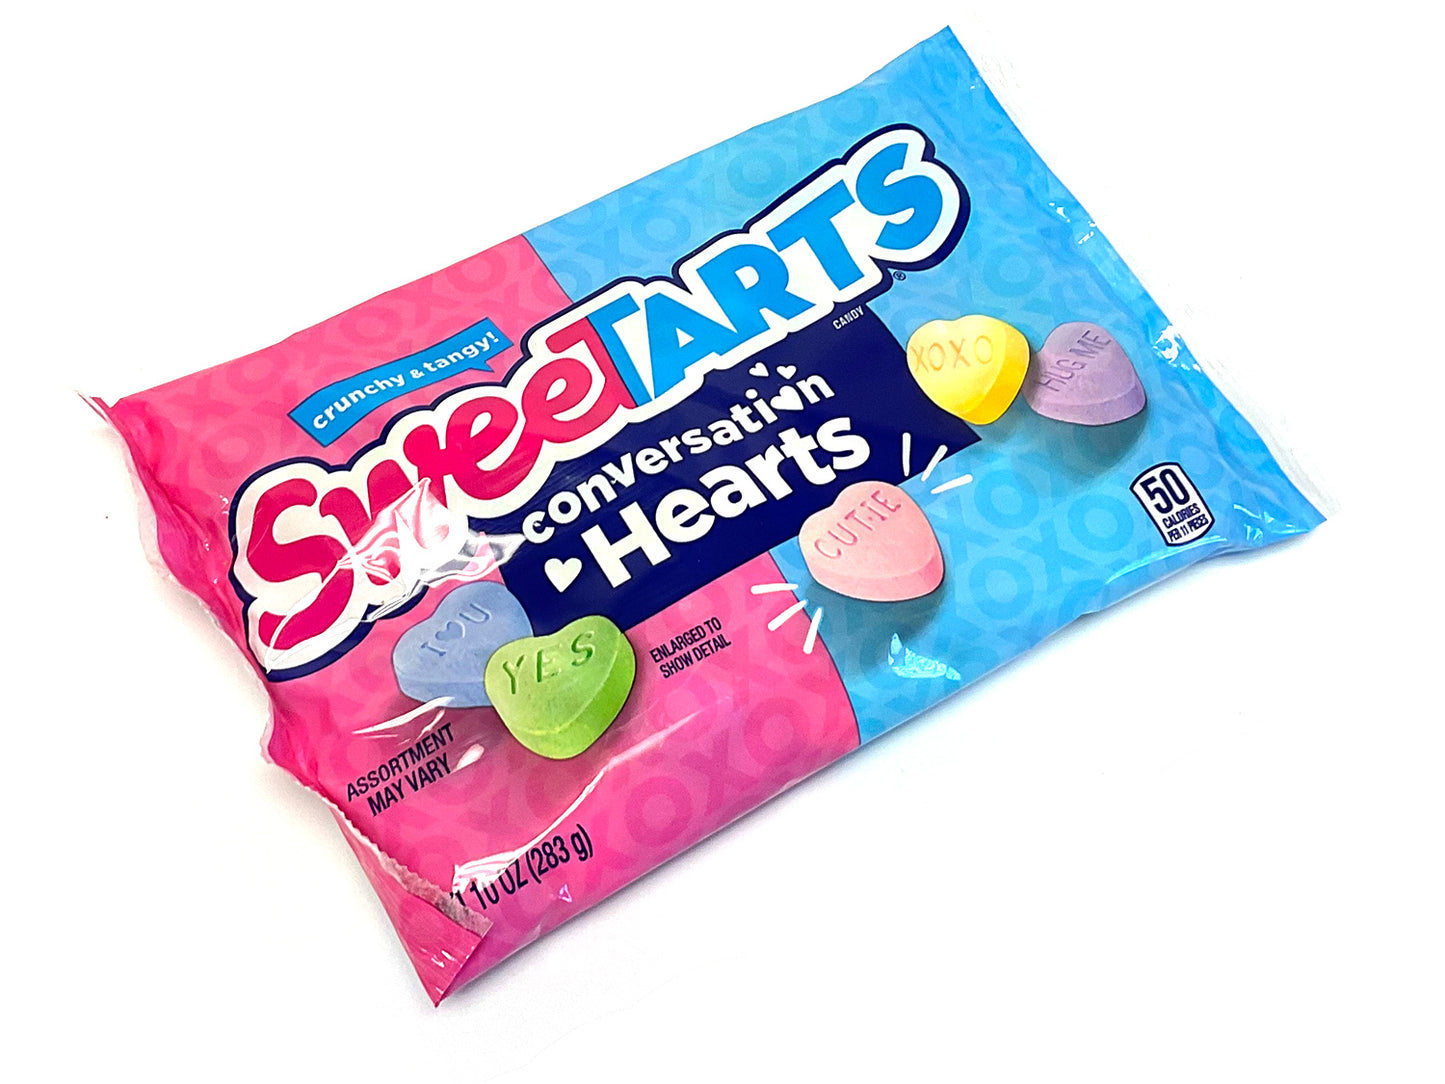 Sweetarts Conversation Hearts - 10 oz bag